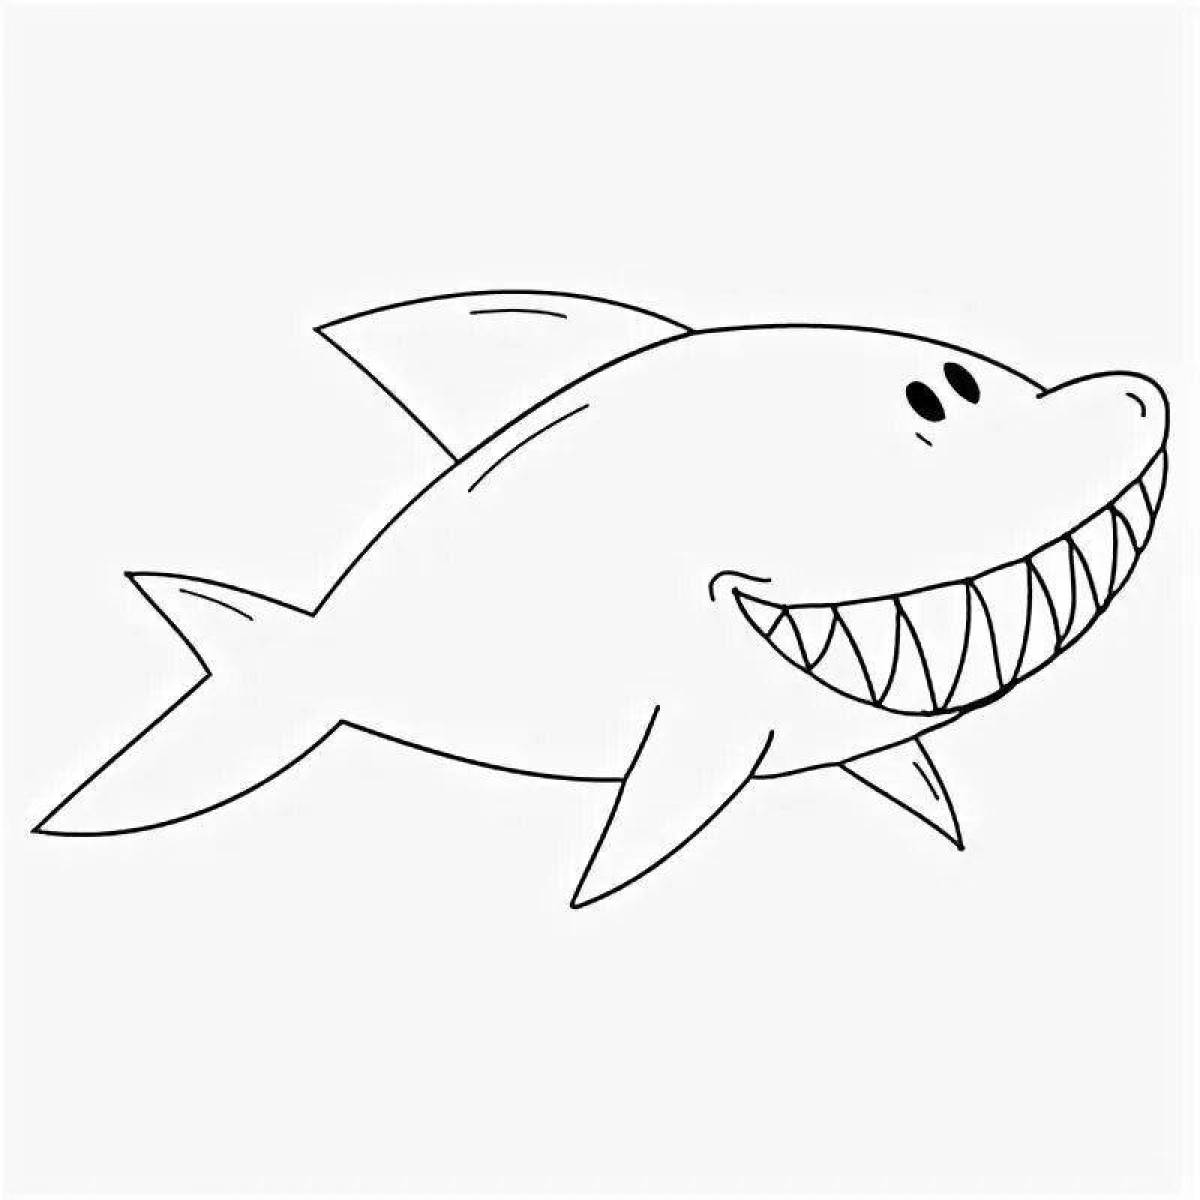 Жирная раскраска акула от икеа